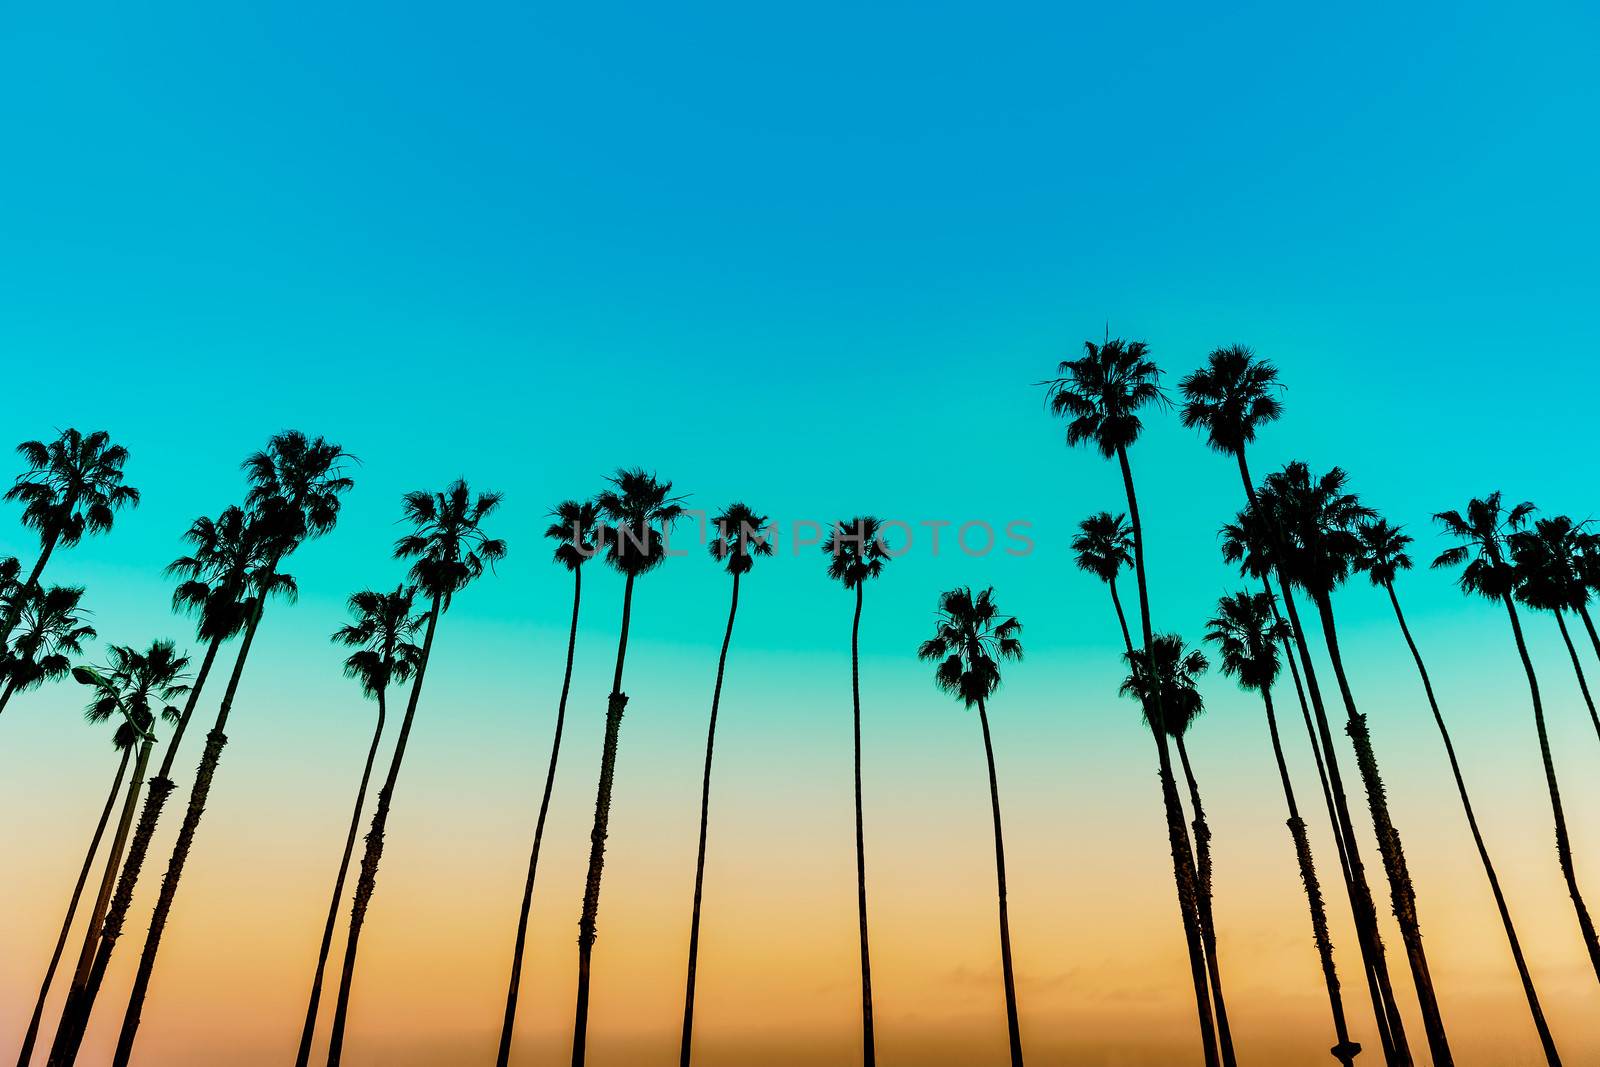 California sunset Palm tree rows in Santa Barbara US